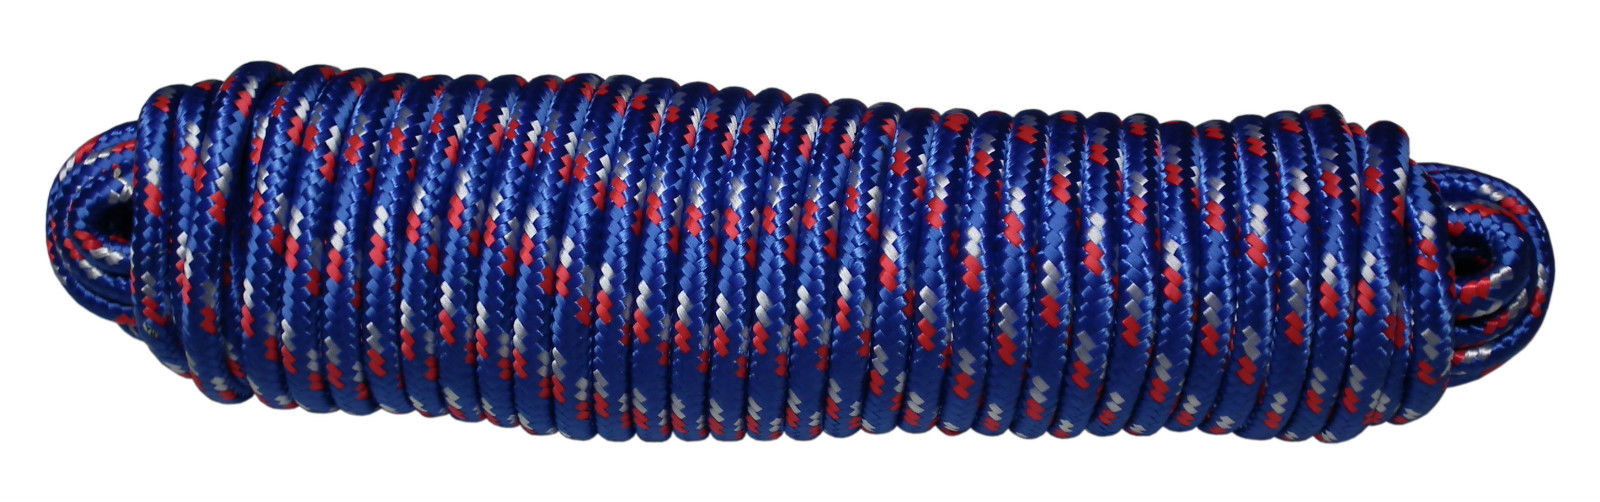 Polypropylene Rope 30M - Blue